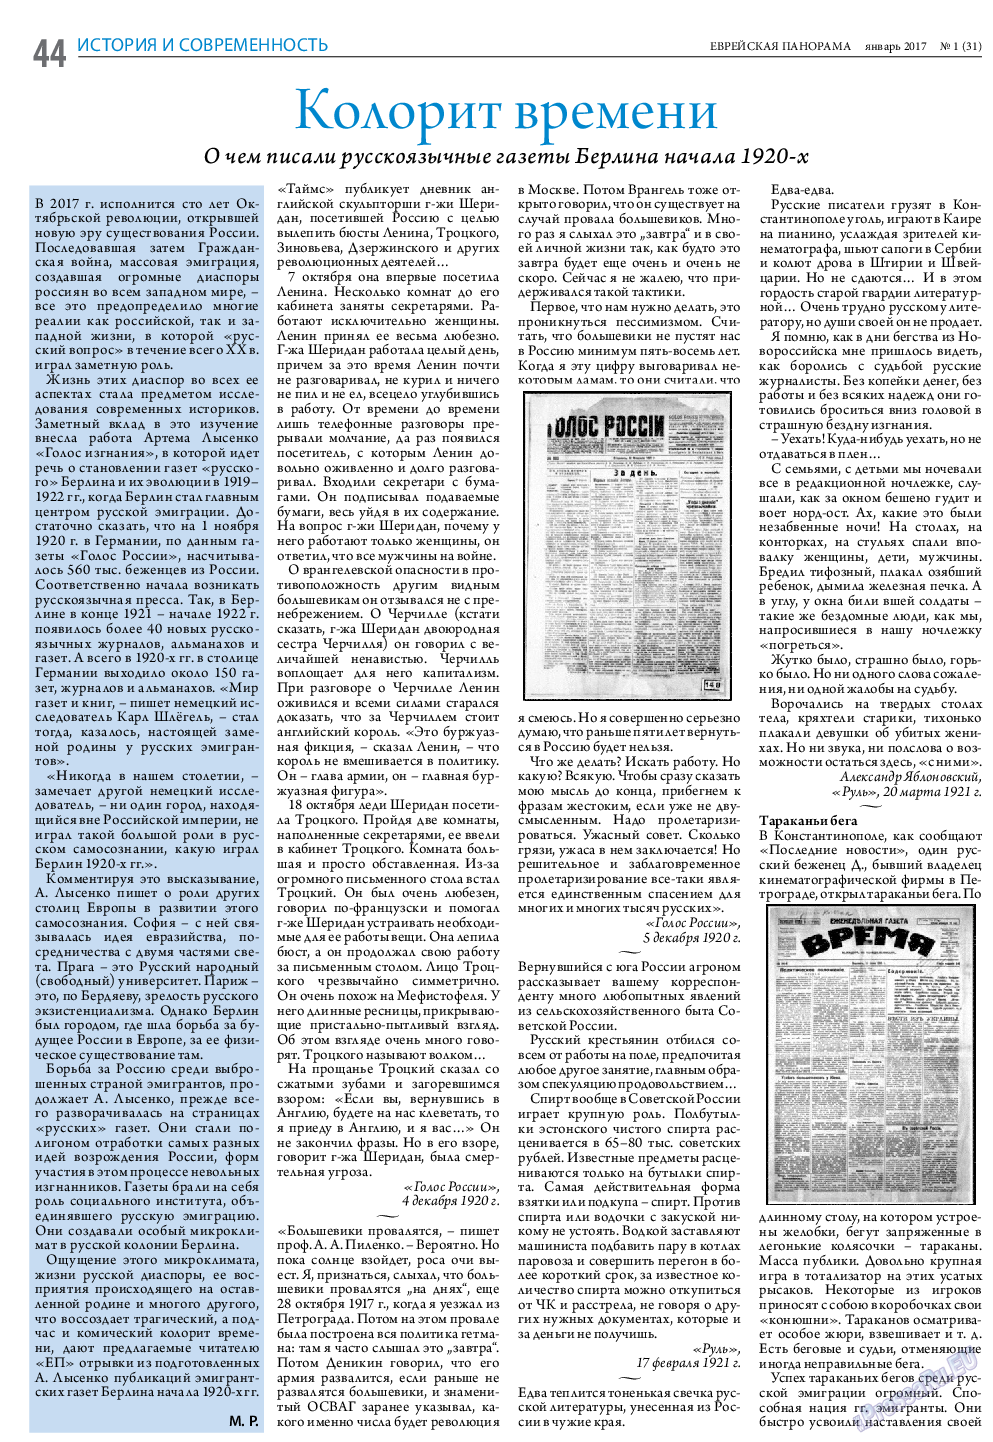 Еврейская панорама, газета. 2017 №1 стр.44